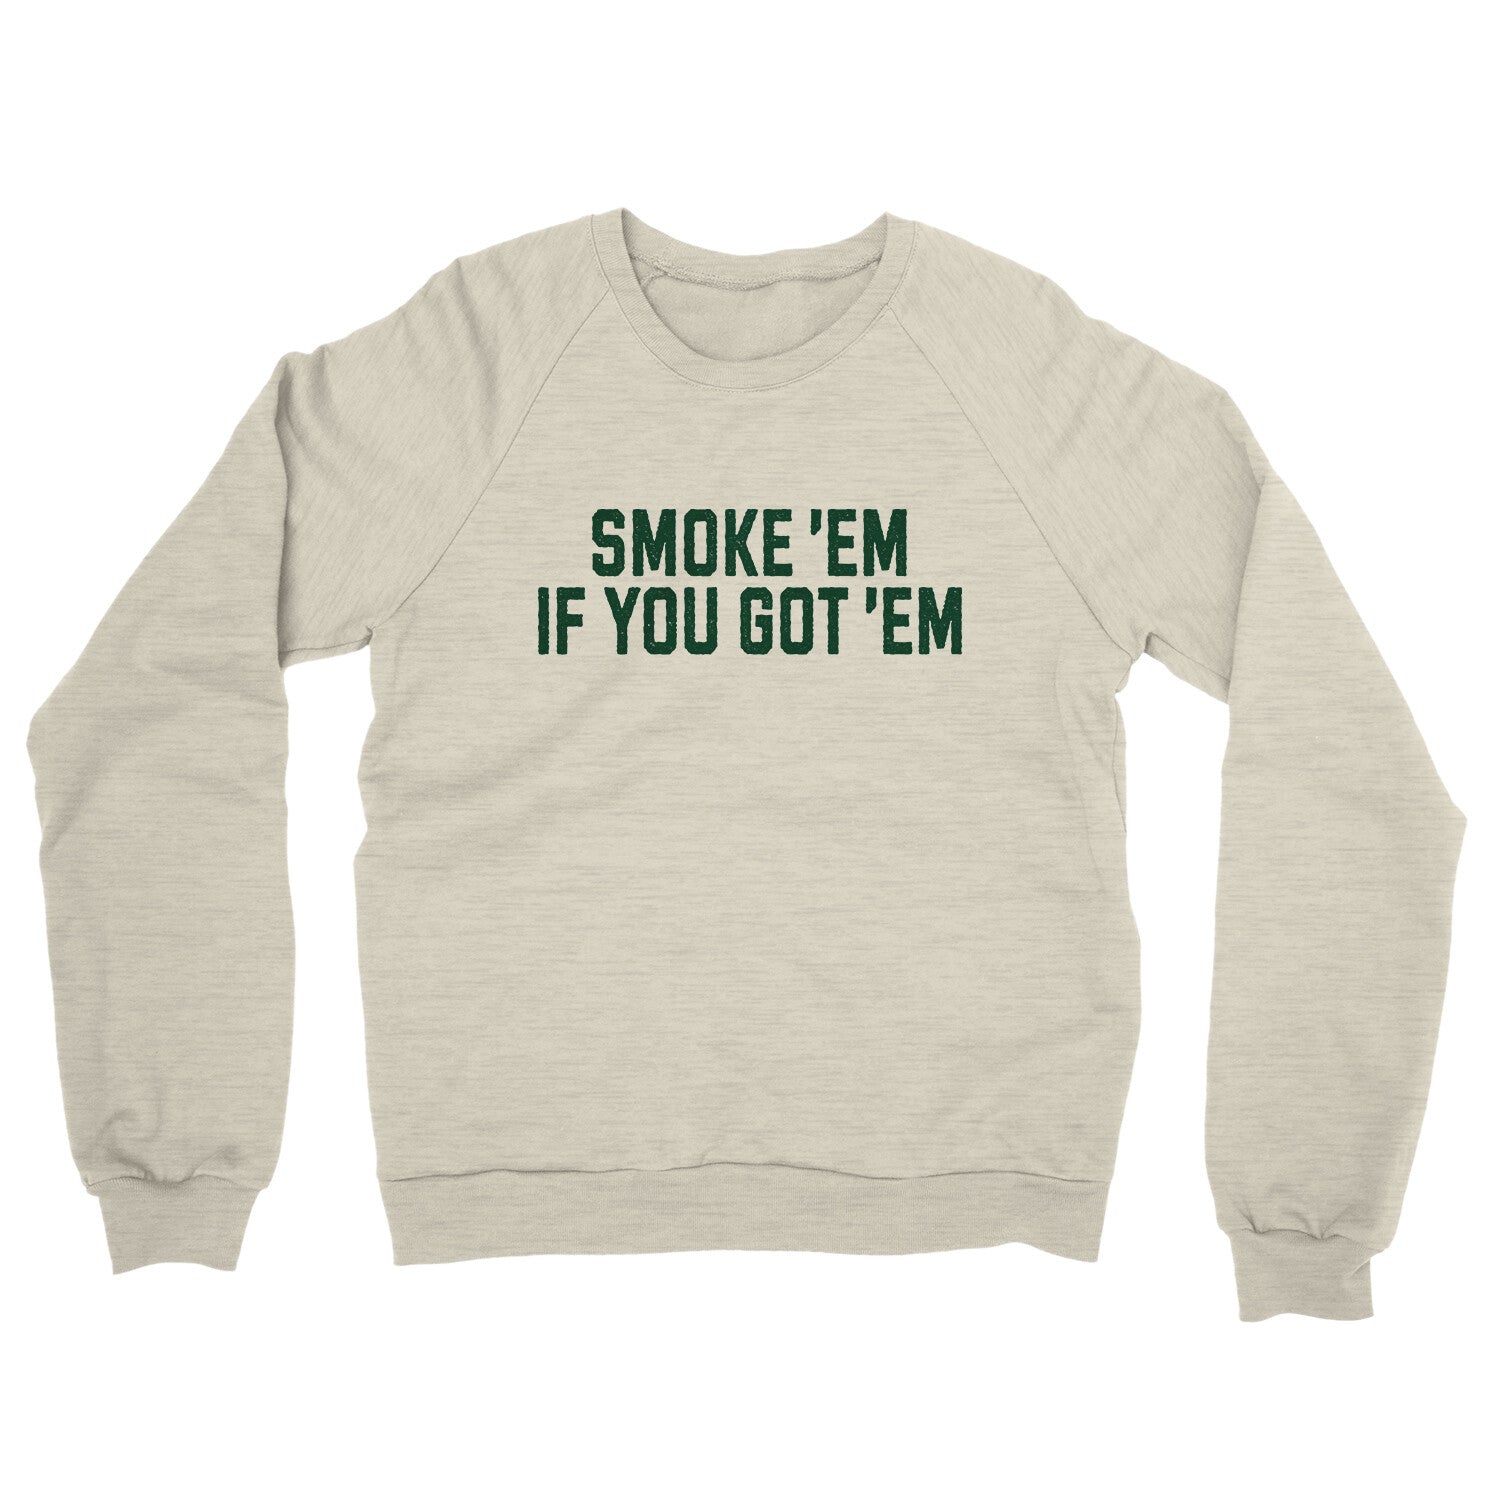 Smoke ‘em If you Got ‘em in Heather Oatmeal Color